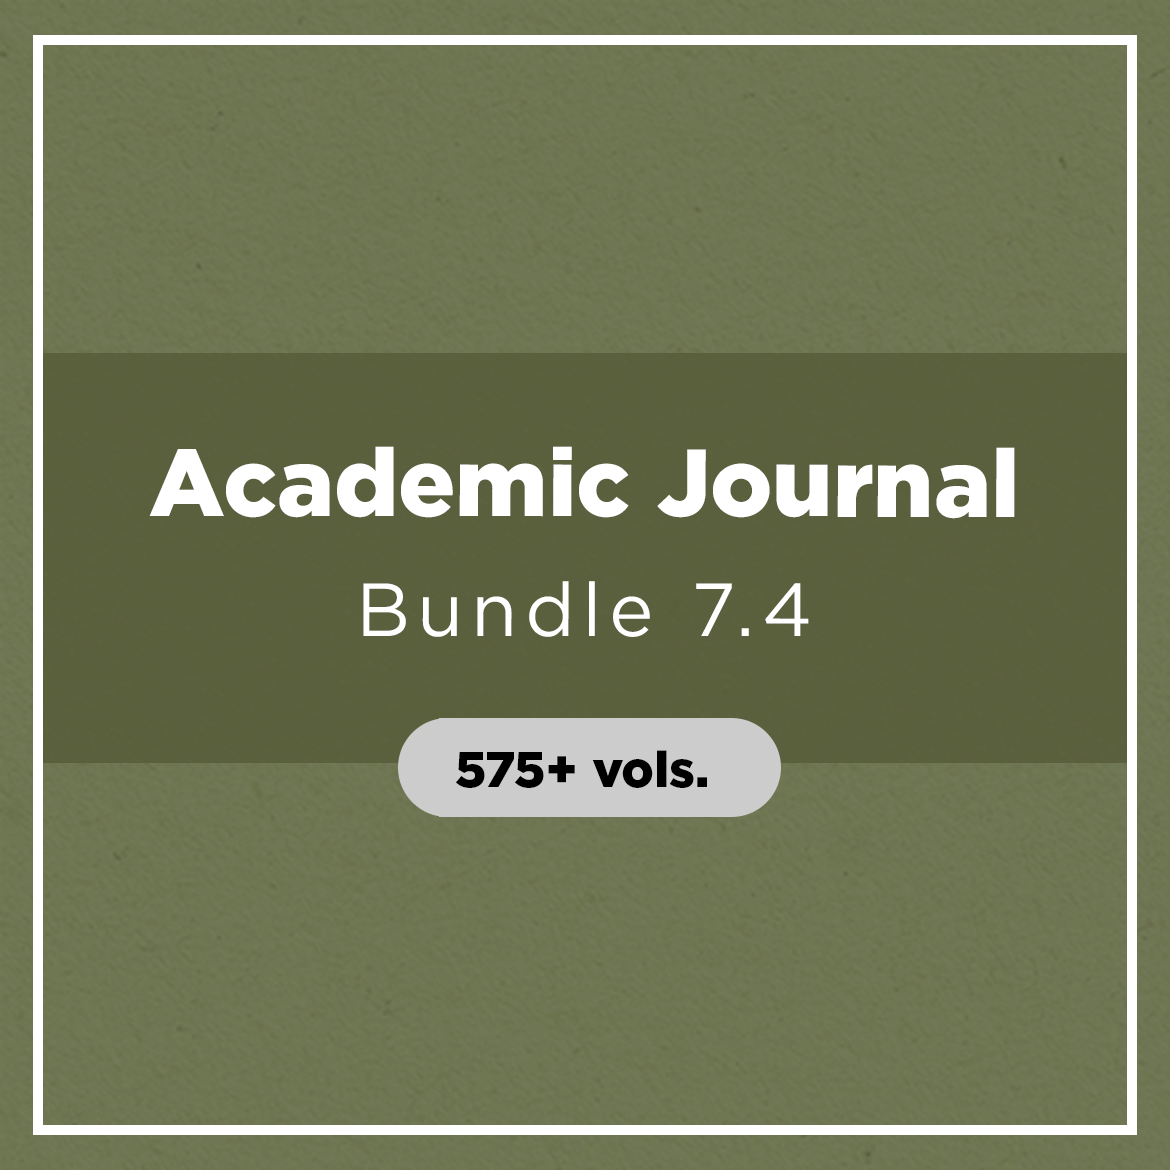 Academic Journal Bundle 7.4 (575+ vols.)